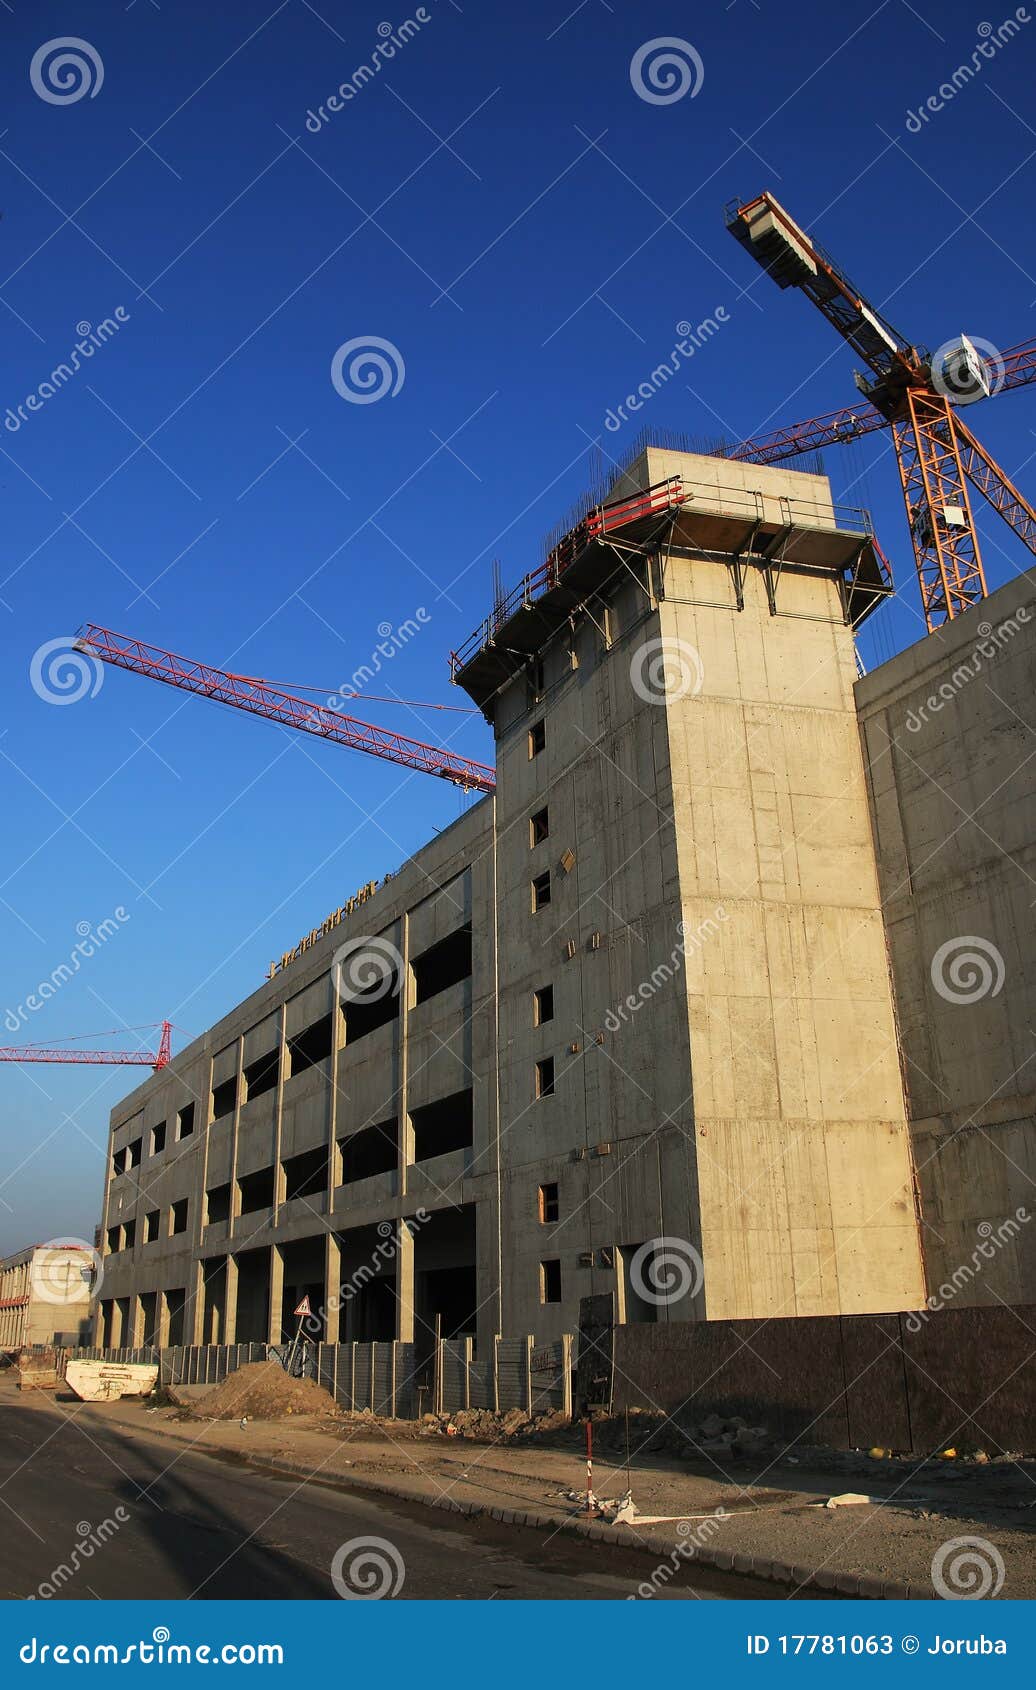 Concrete Building Under Construction Stock Image - Image of